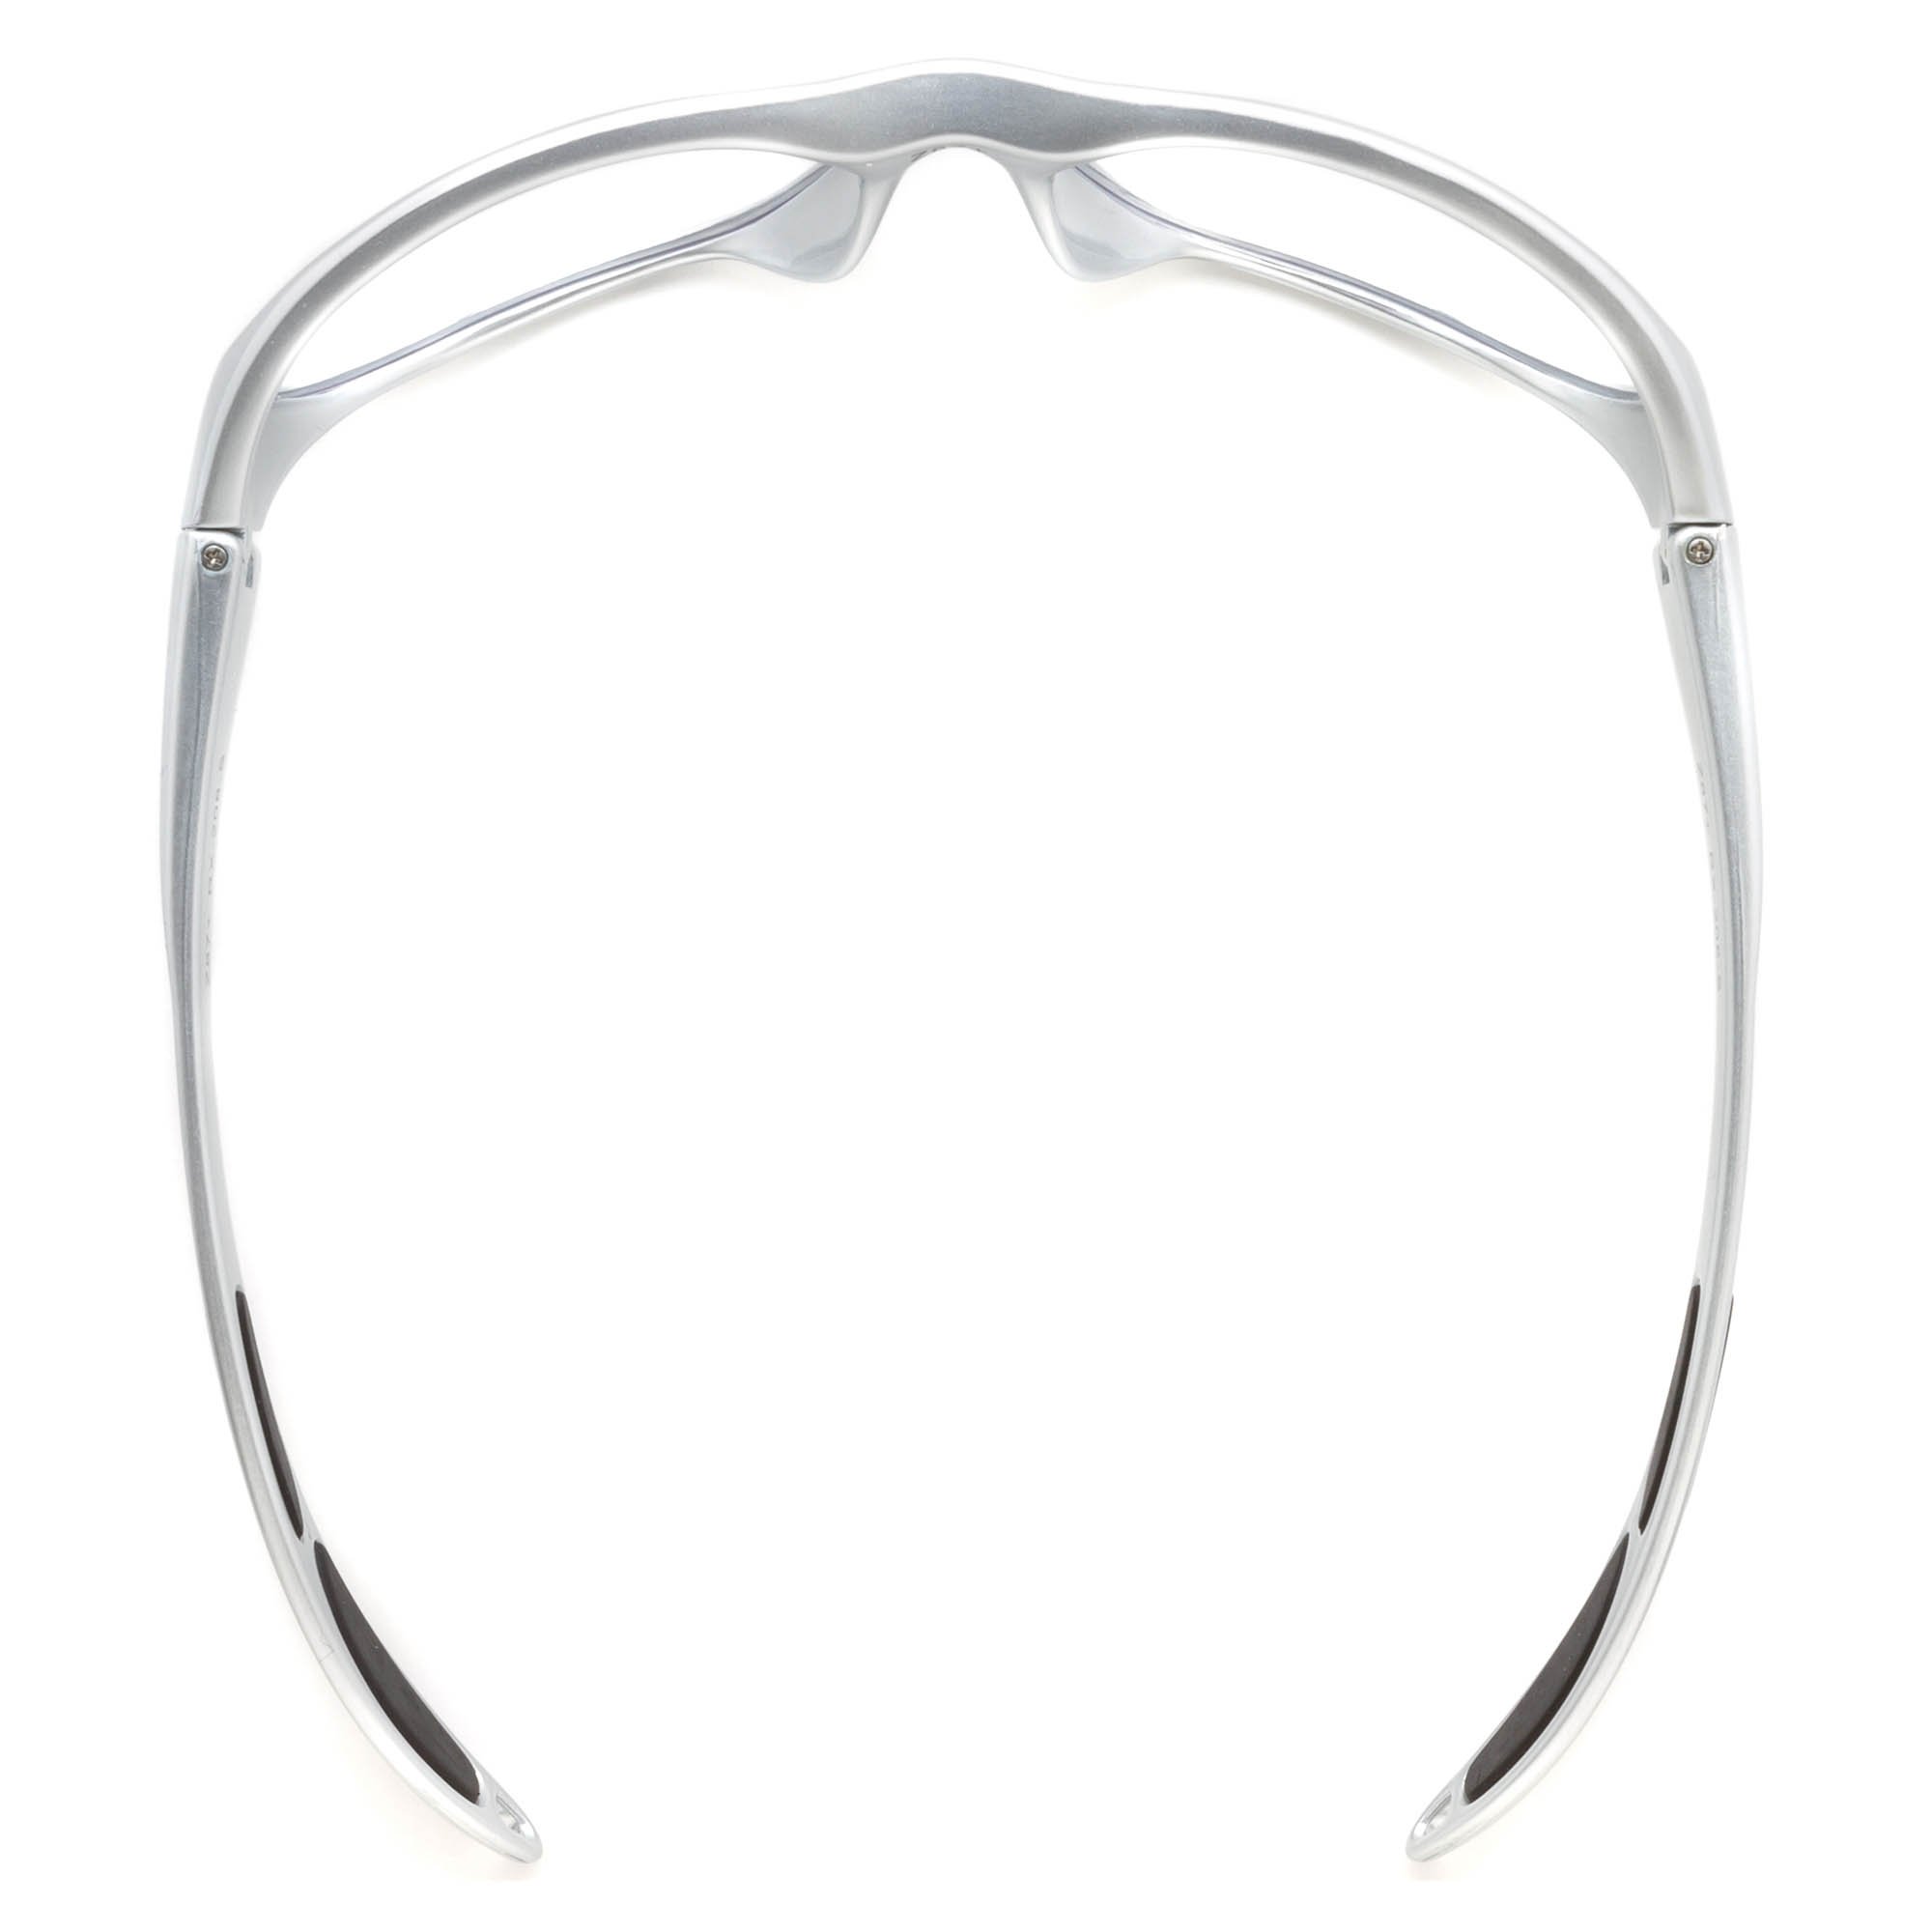 Ultralite Wrap Lead Glasses